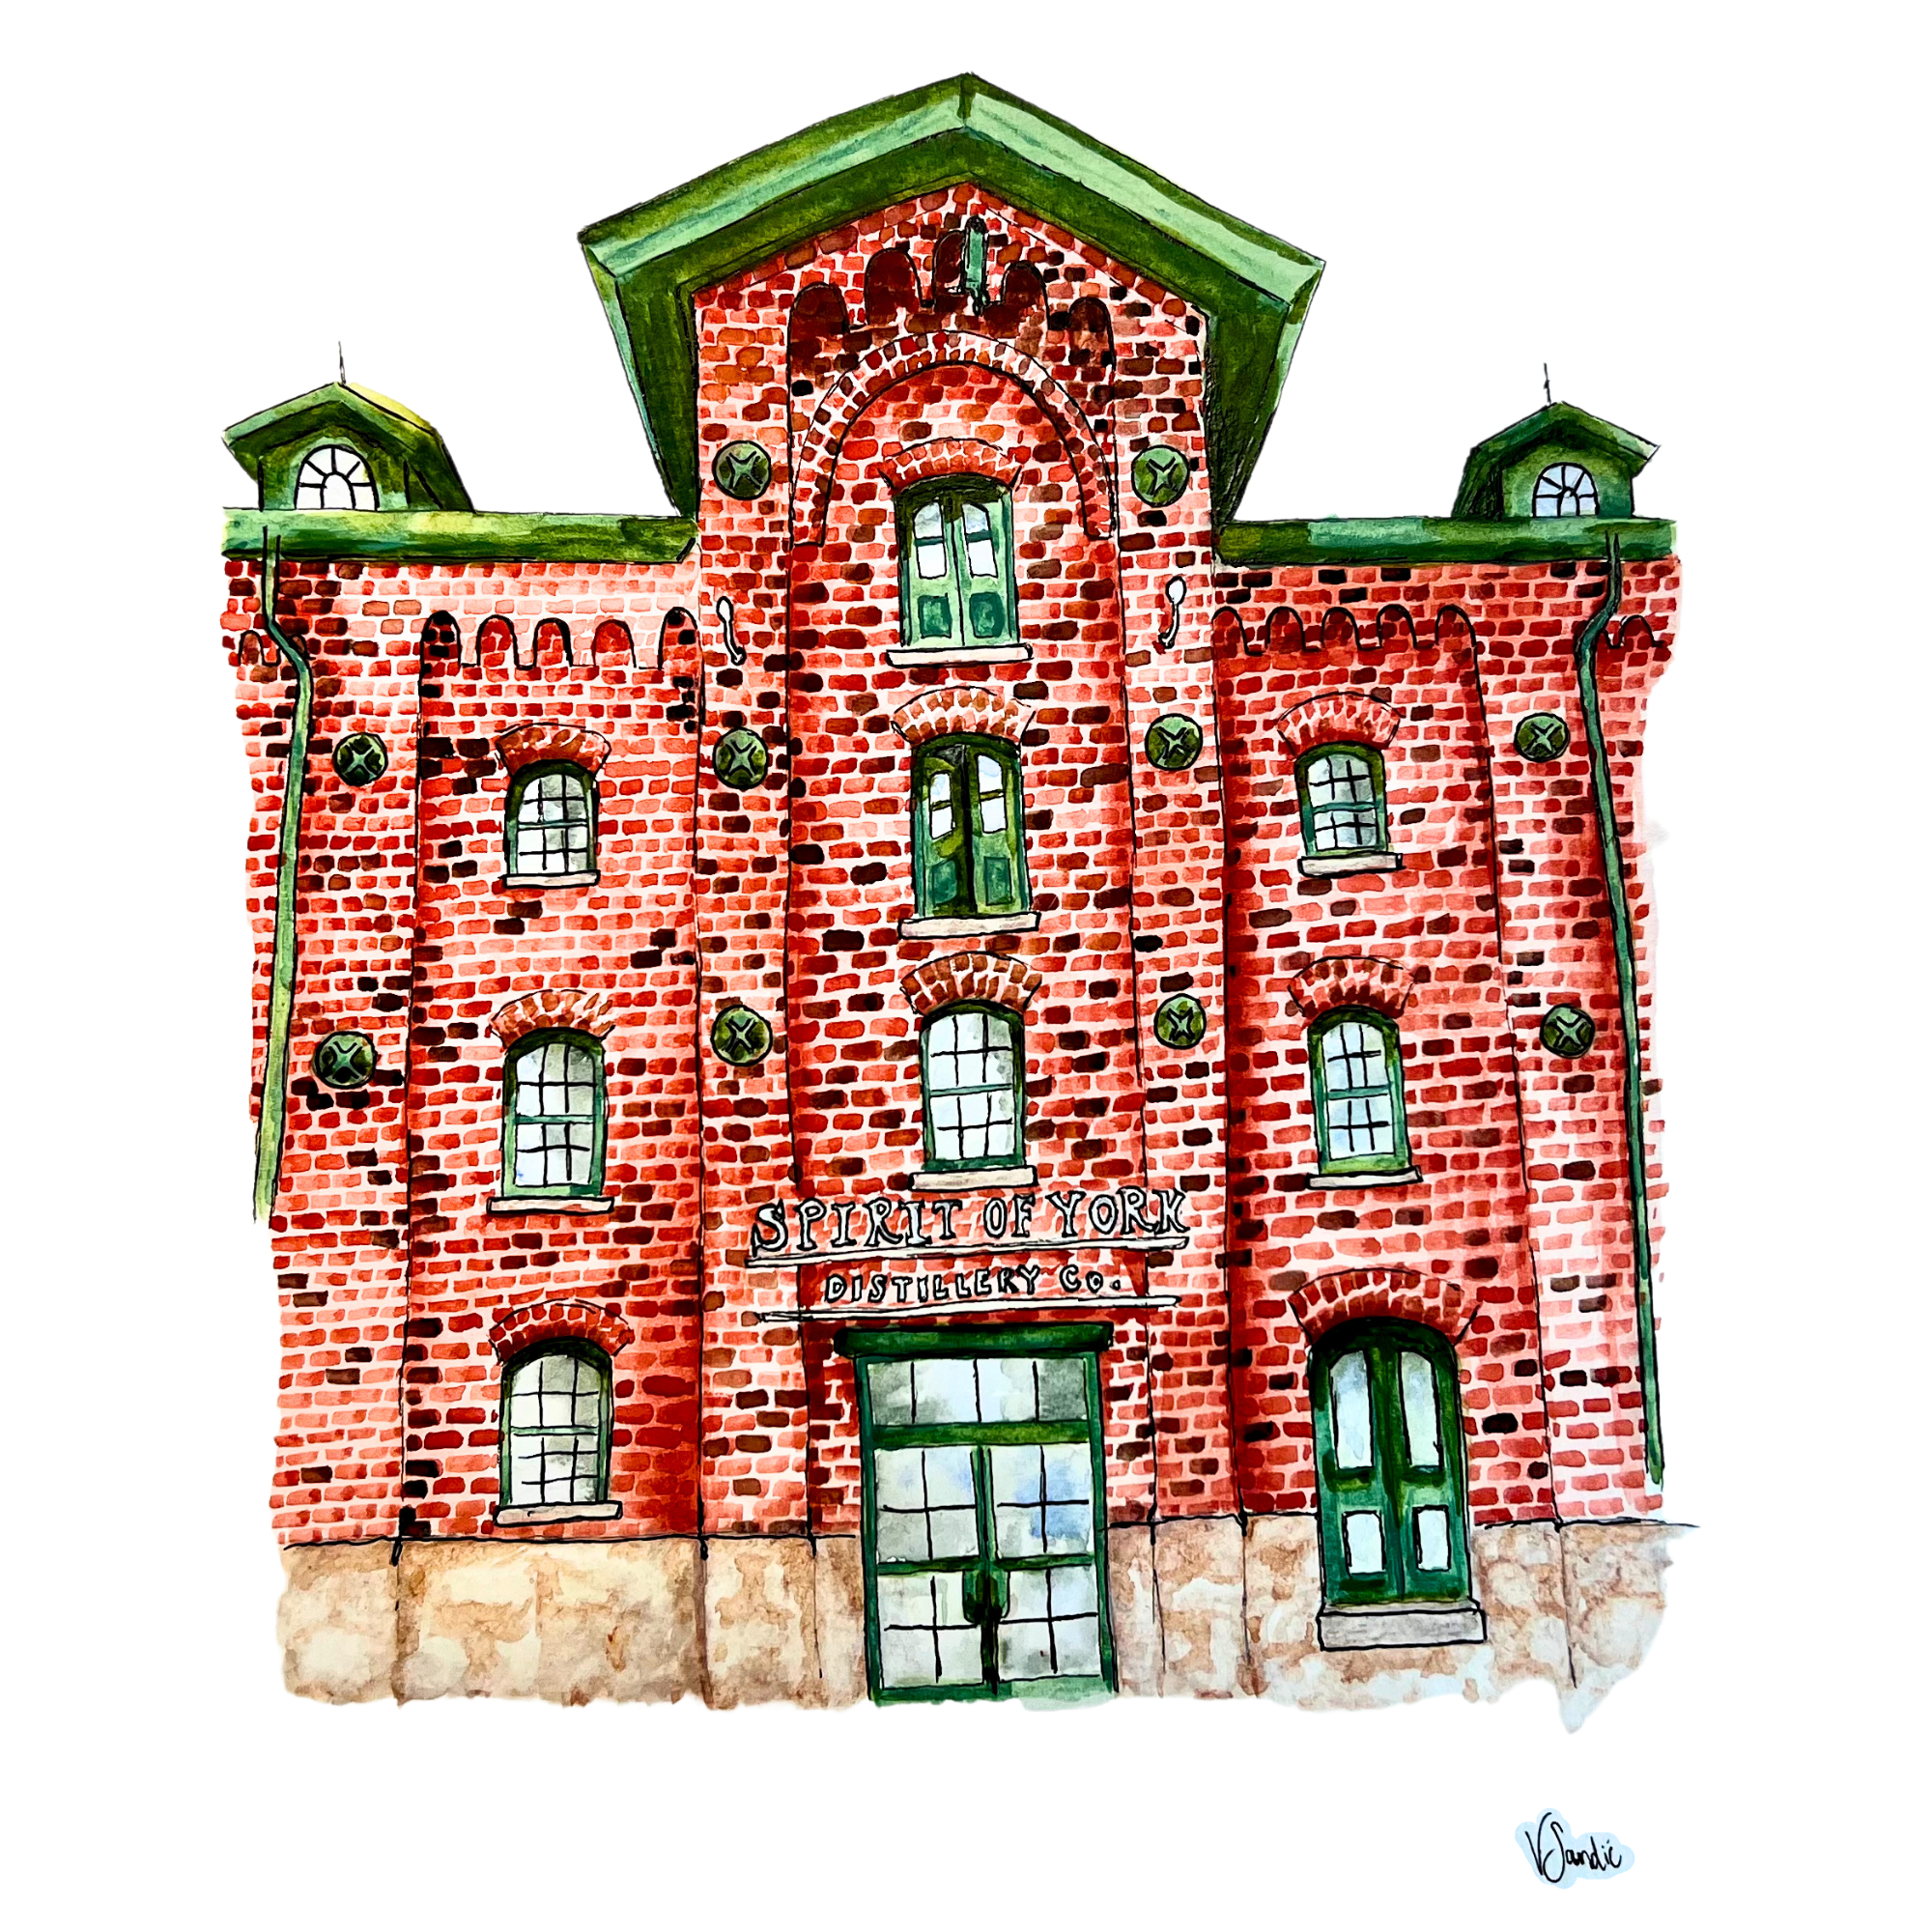 image for "Original Brick" - Spirit of York Distillery